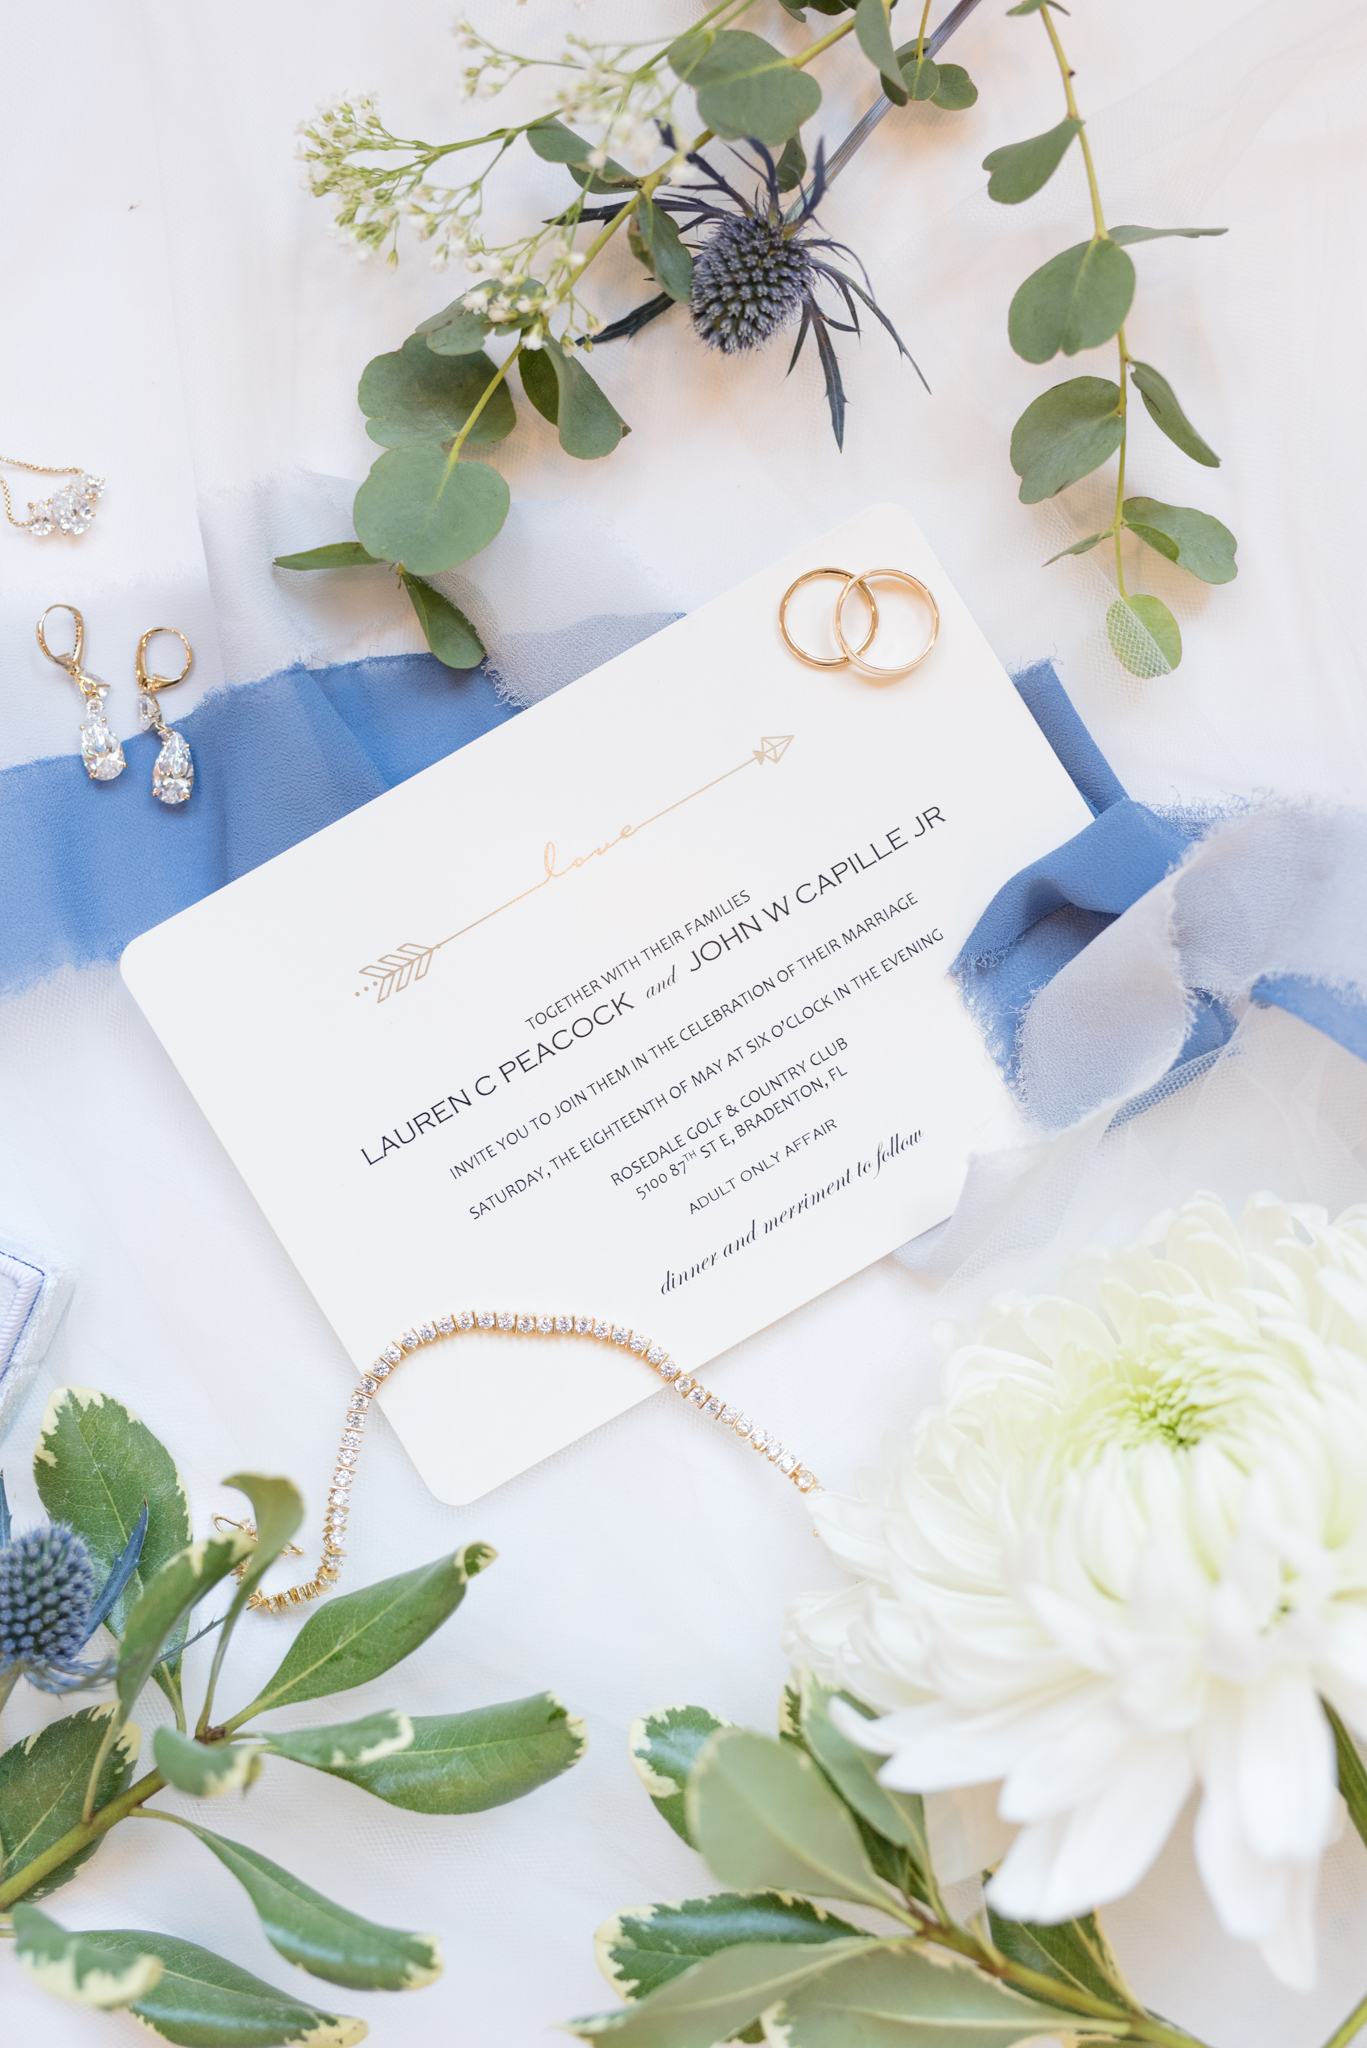 Wedding invitation and details.